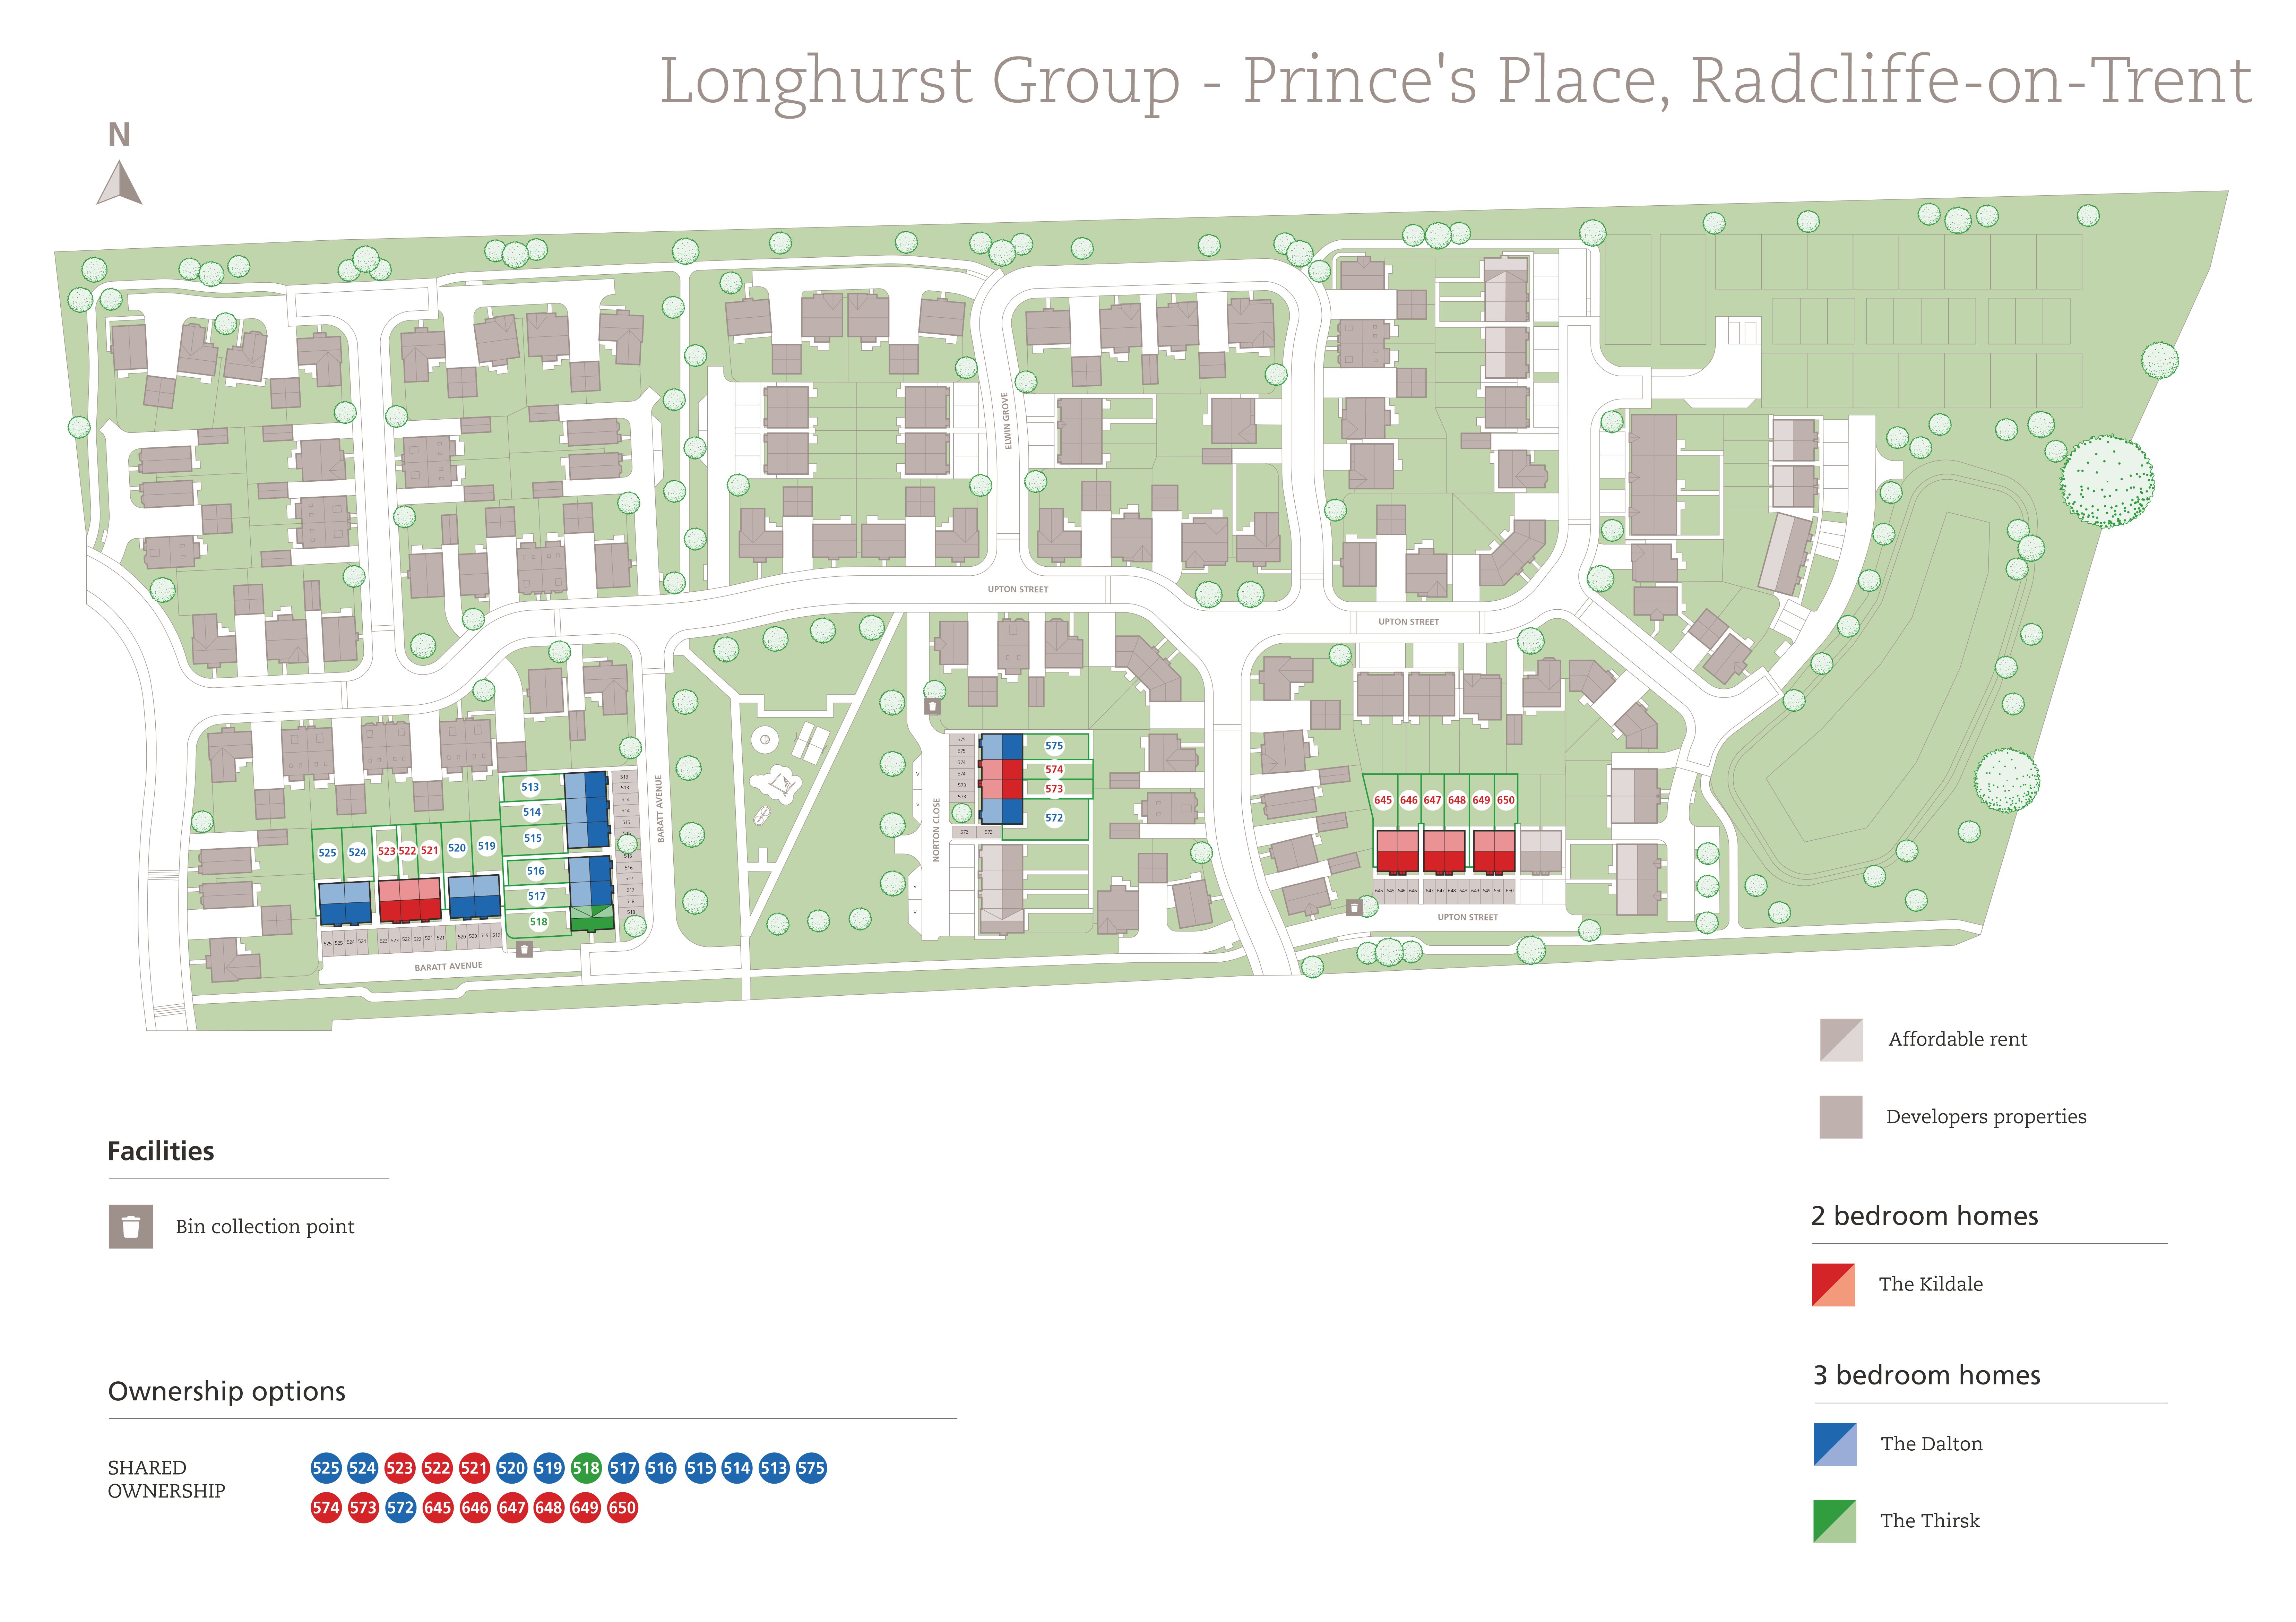 Prince's Place development plan